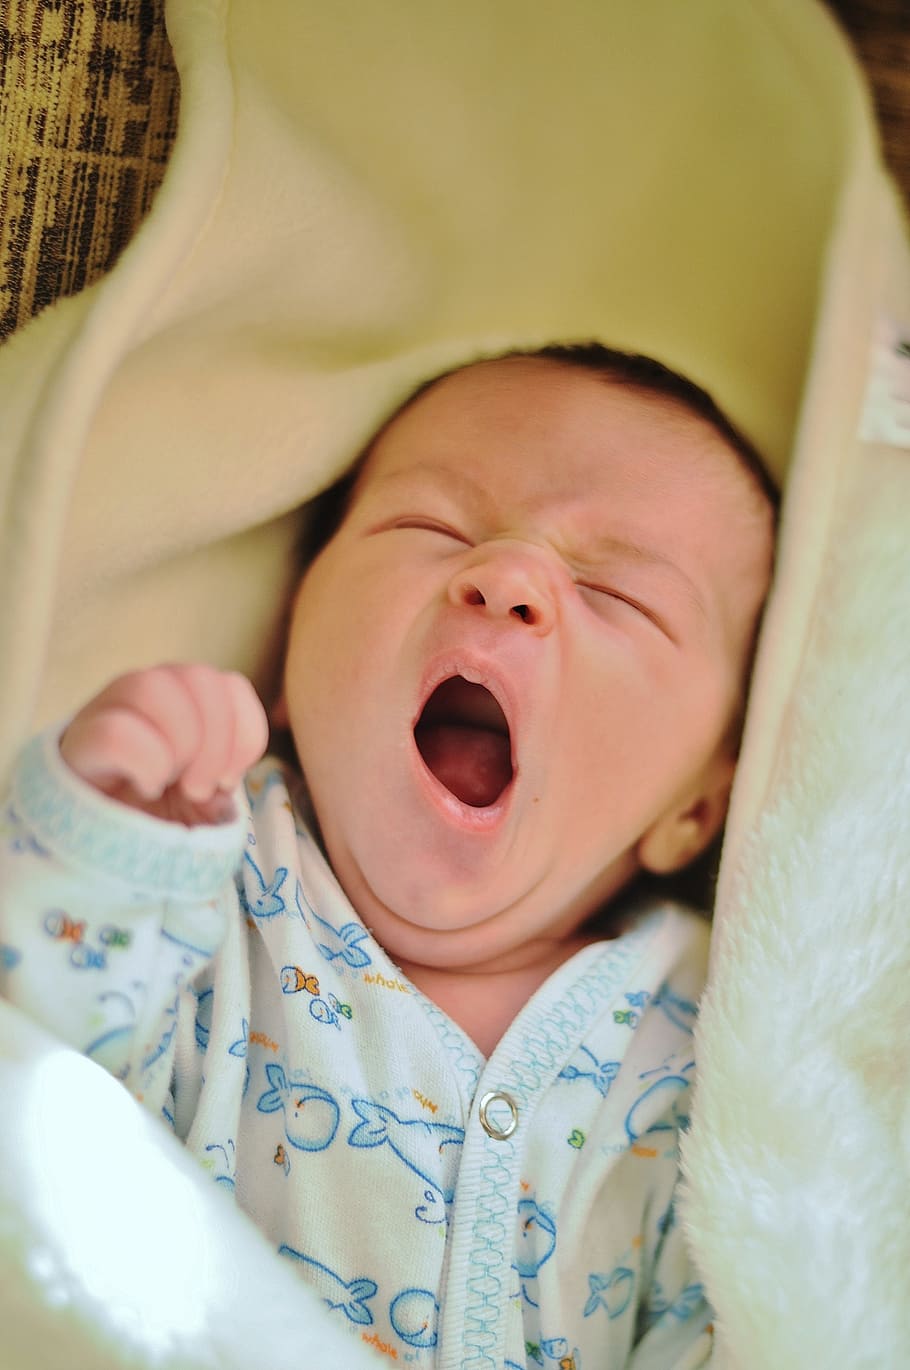 baby wearing onesie yawning with blanket, white, shirt, yellow